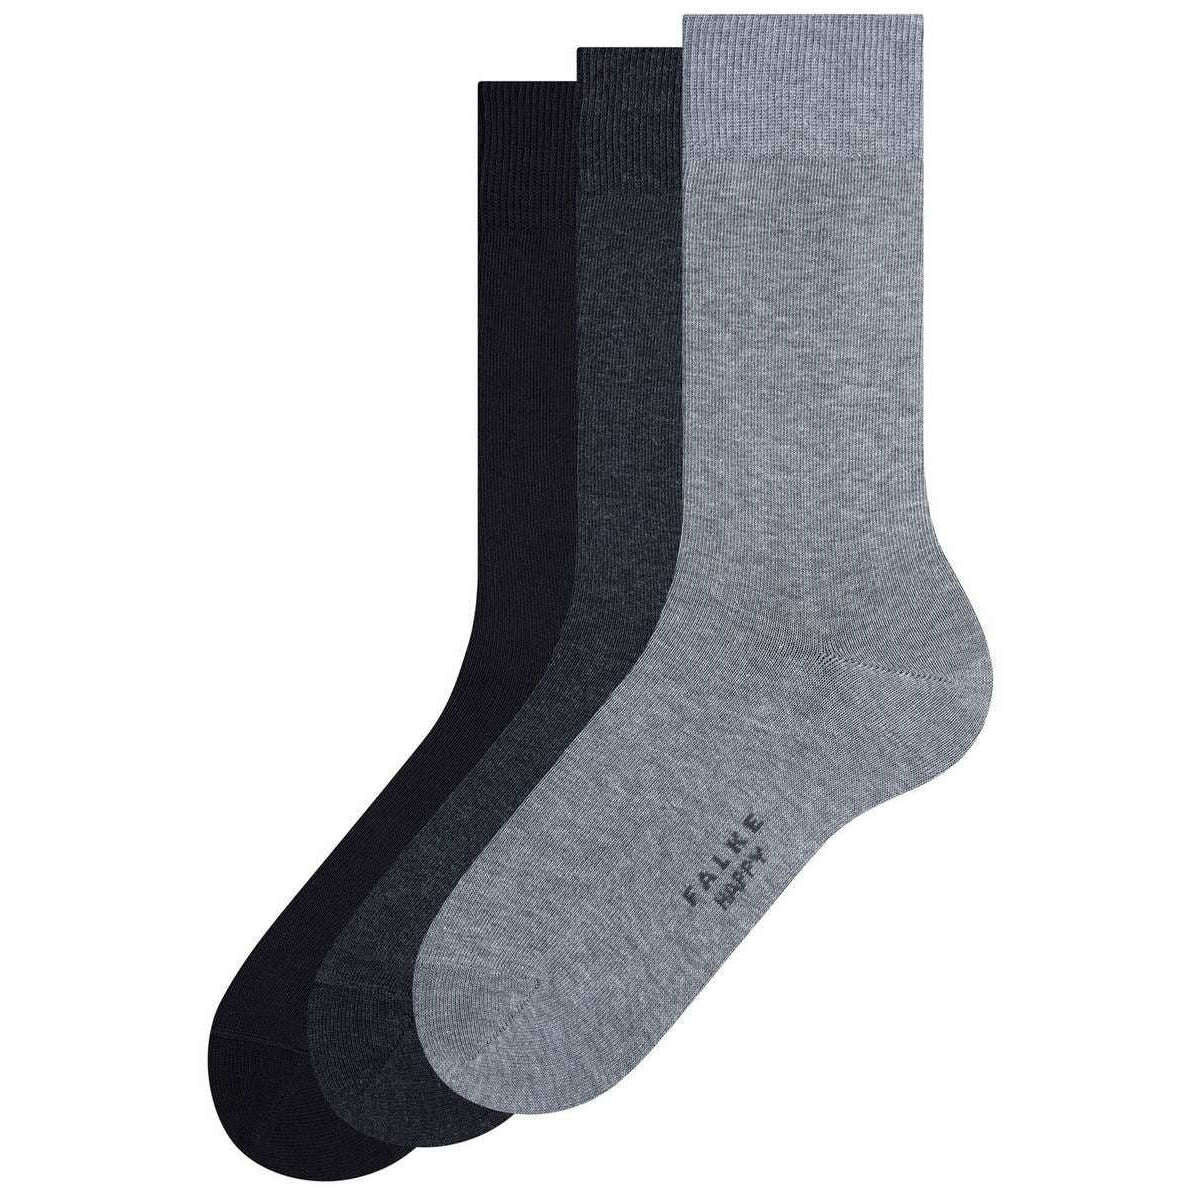 Falke Happy Box 3 Pack Socks - Grey/Black - Small - 5.5-8 UK | 6.5-9 US | 39-42 EUR